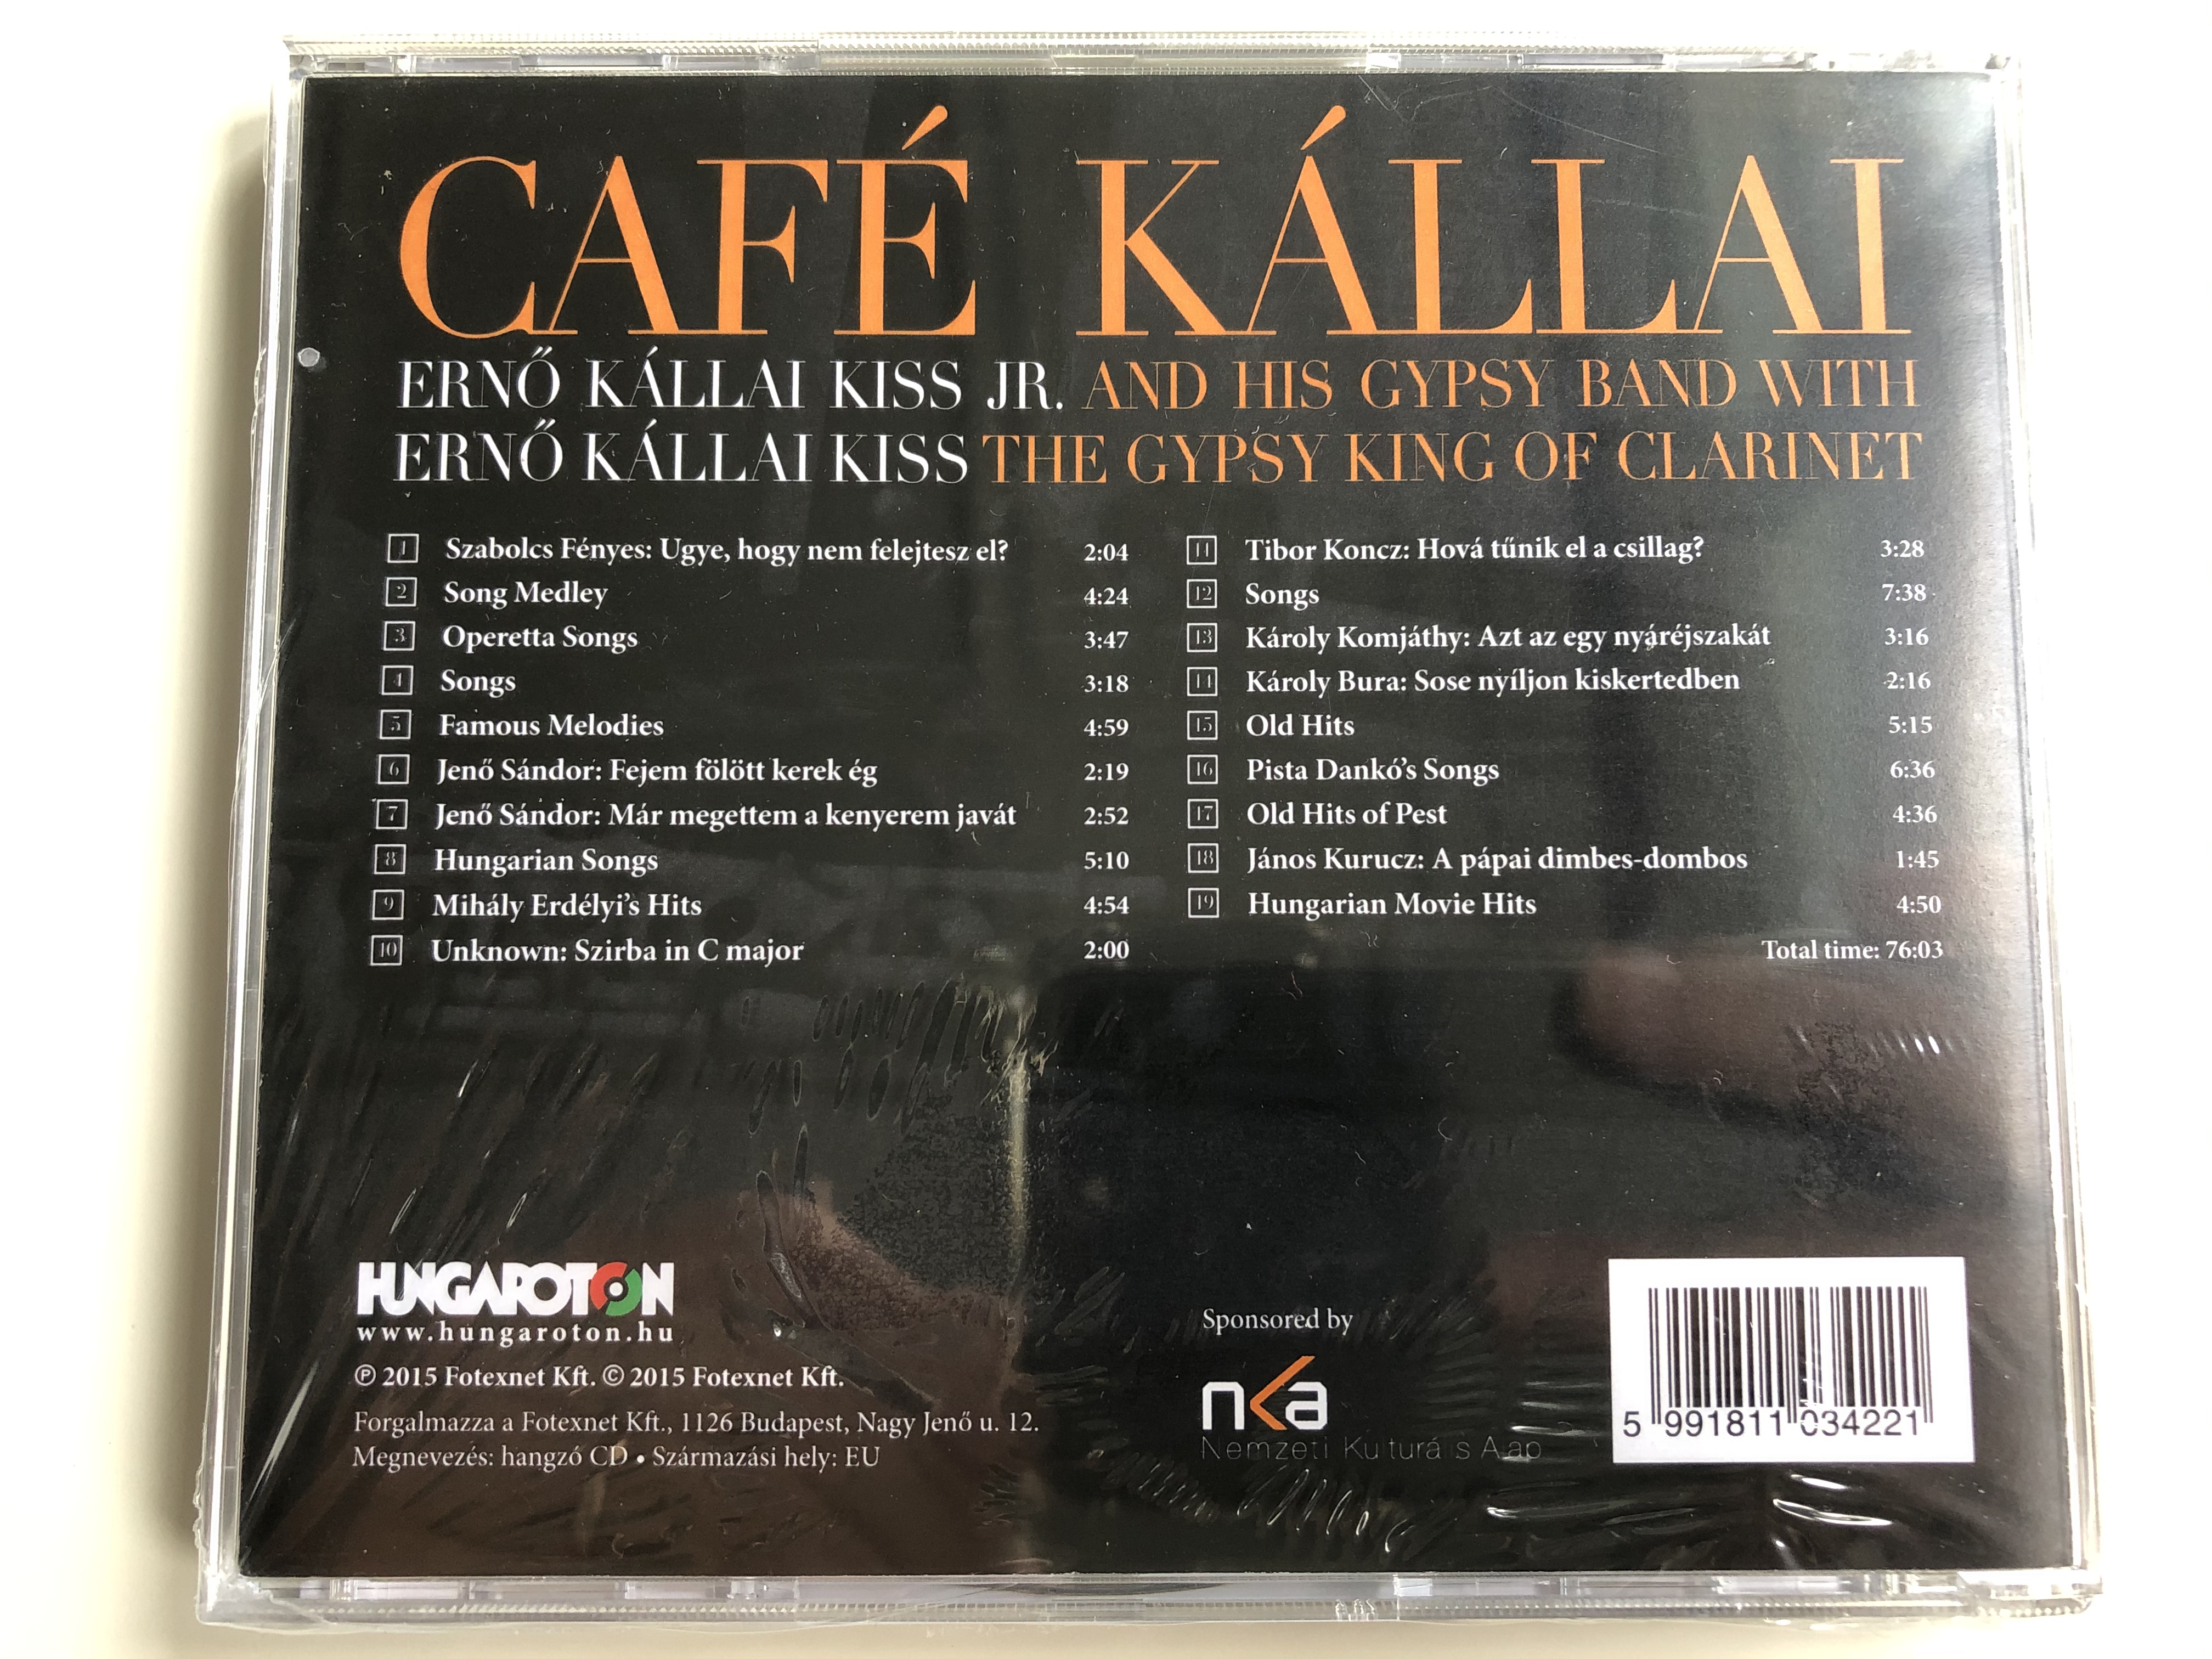 cafe-kallai-erno-kallai-kiss-jr.-and-his-gypsy-band-with-erno-kallai-kiss-the-gypsy-king-of-clarinet-hungaroton-audio-cd-2015-hcd-10342-3-.jpg